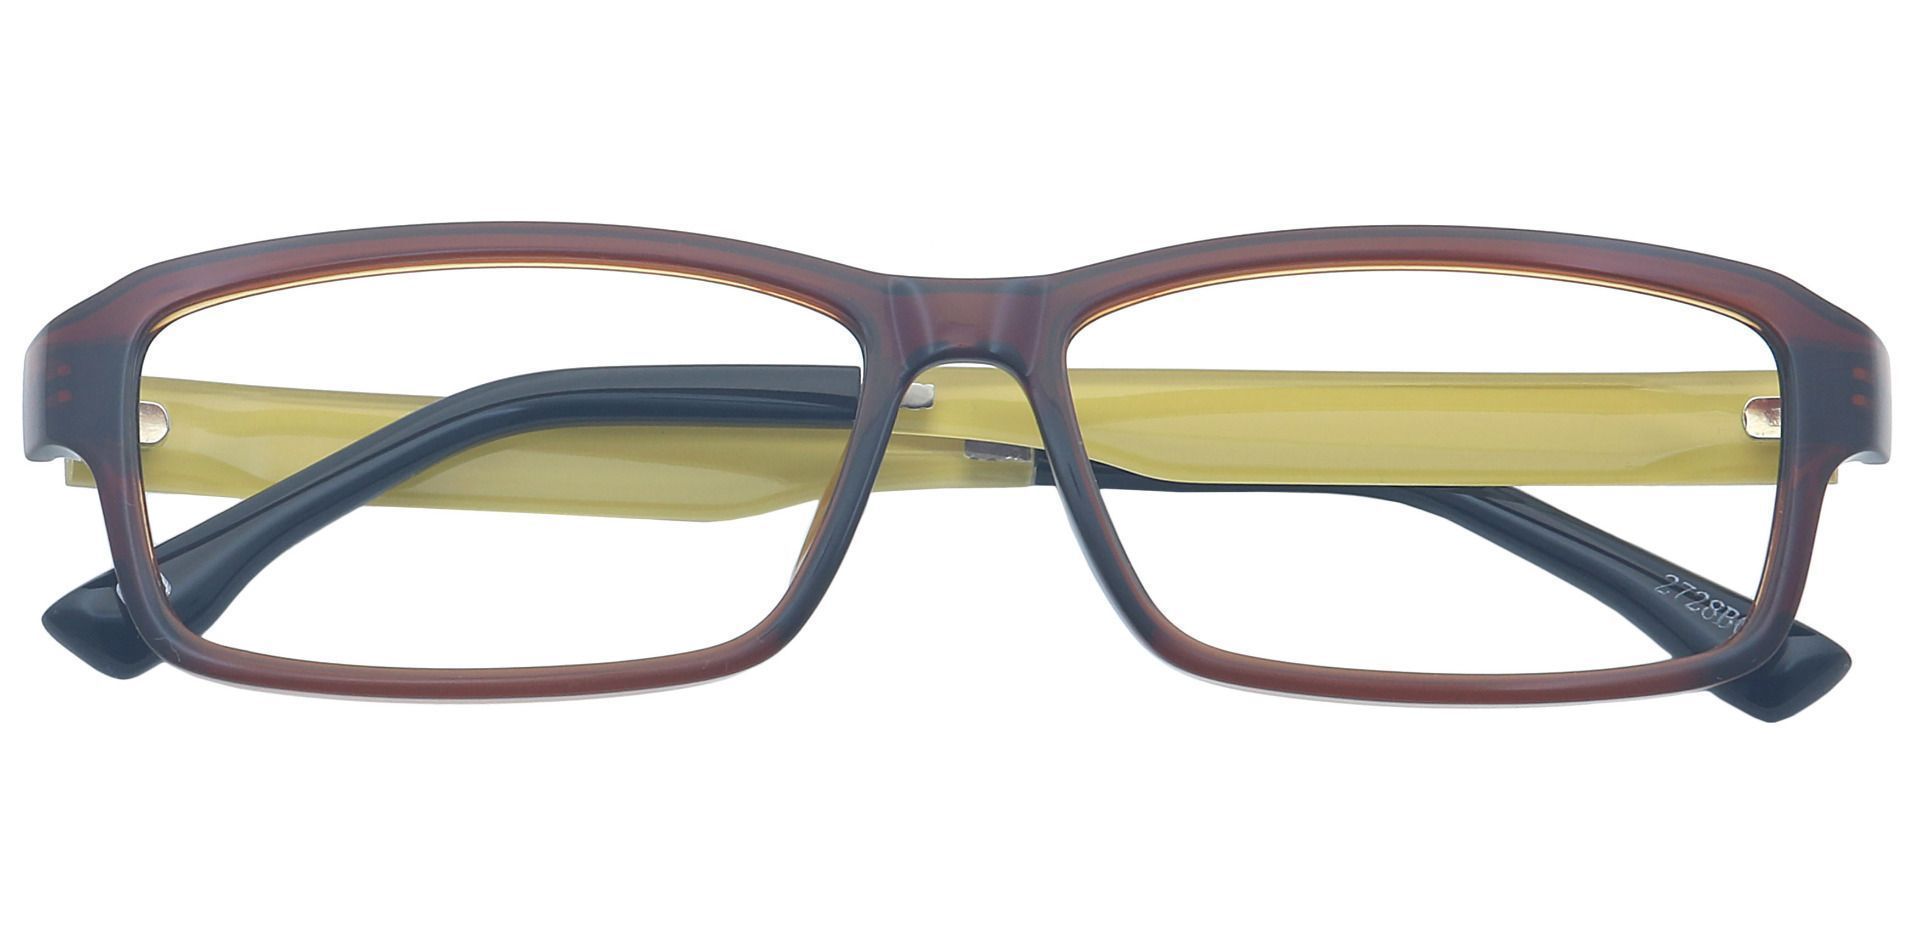 Denim Rectangle Eyeglasses Frame - Brown